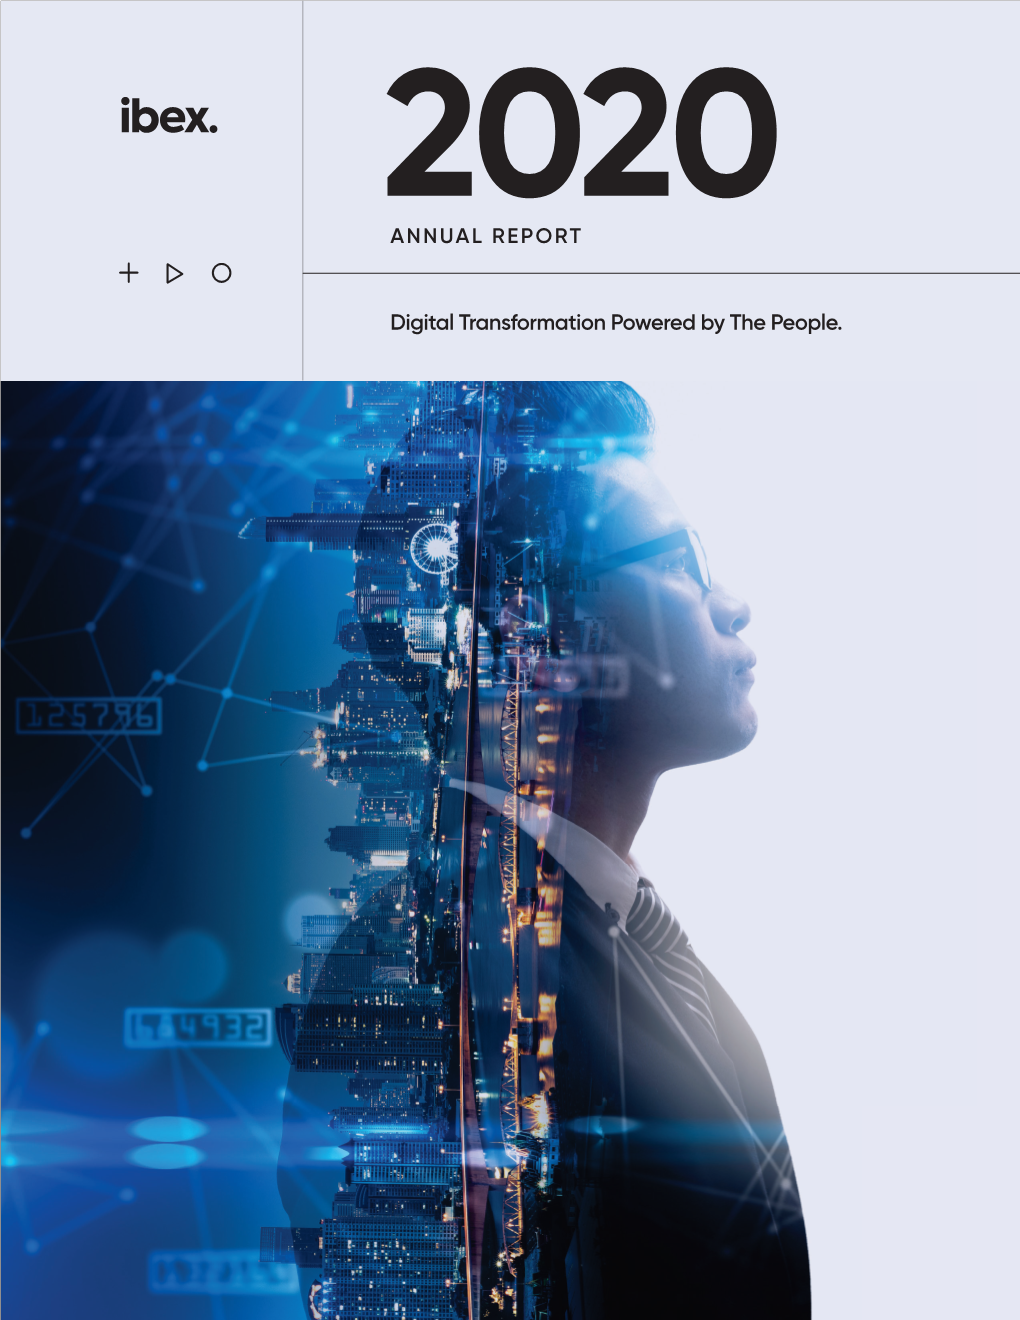 Ibex. 2020 ANNUAL REPORT